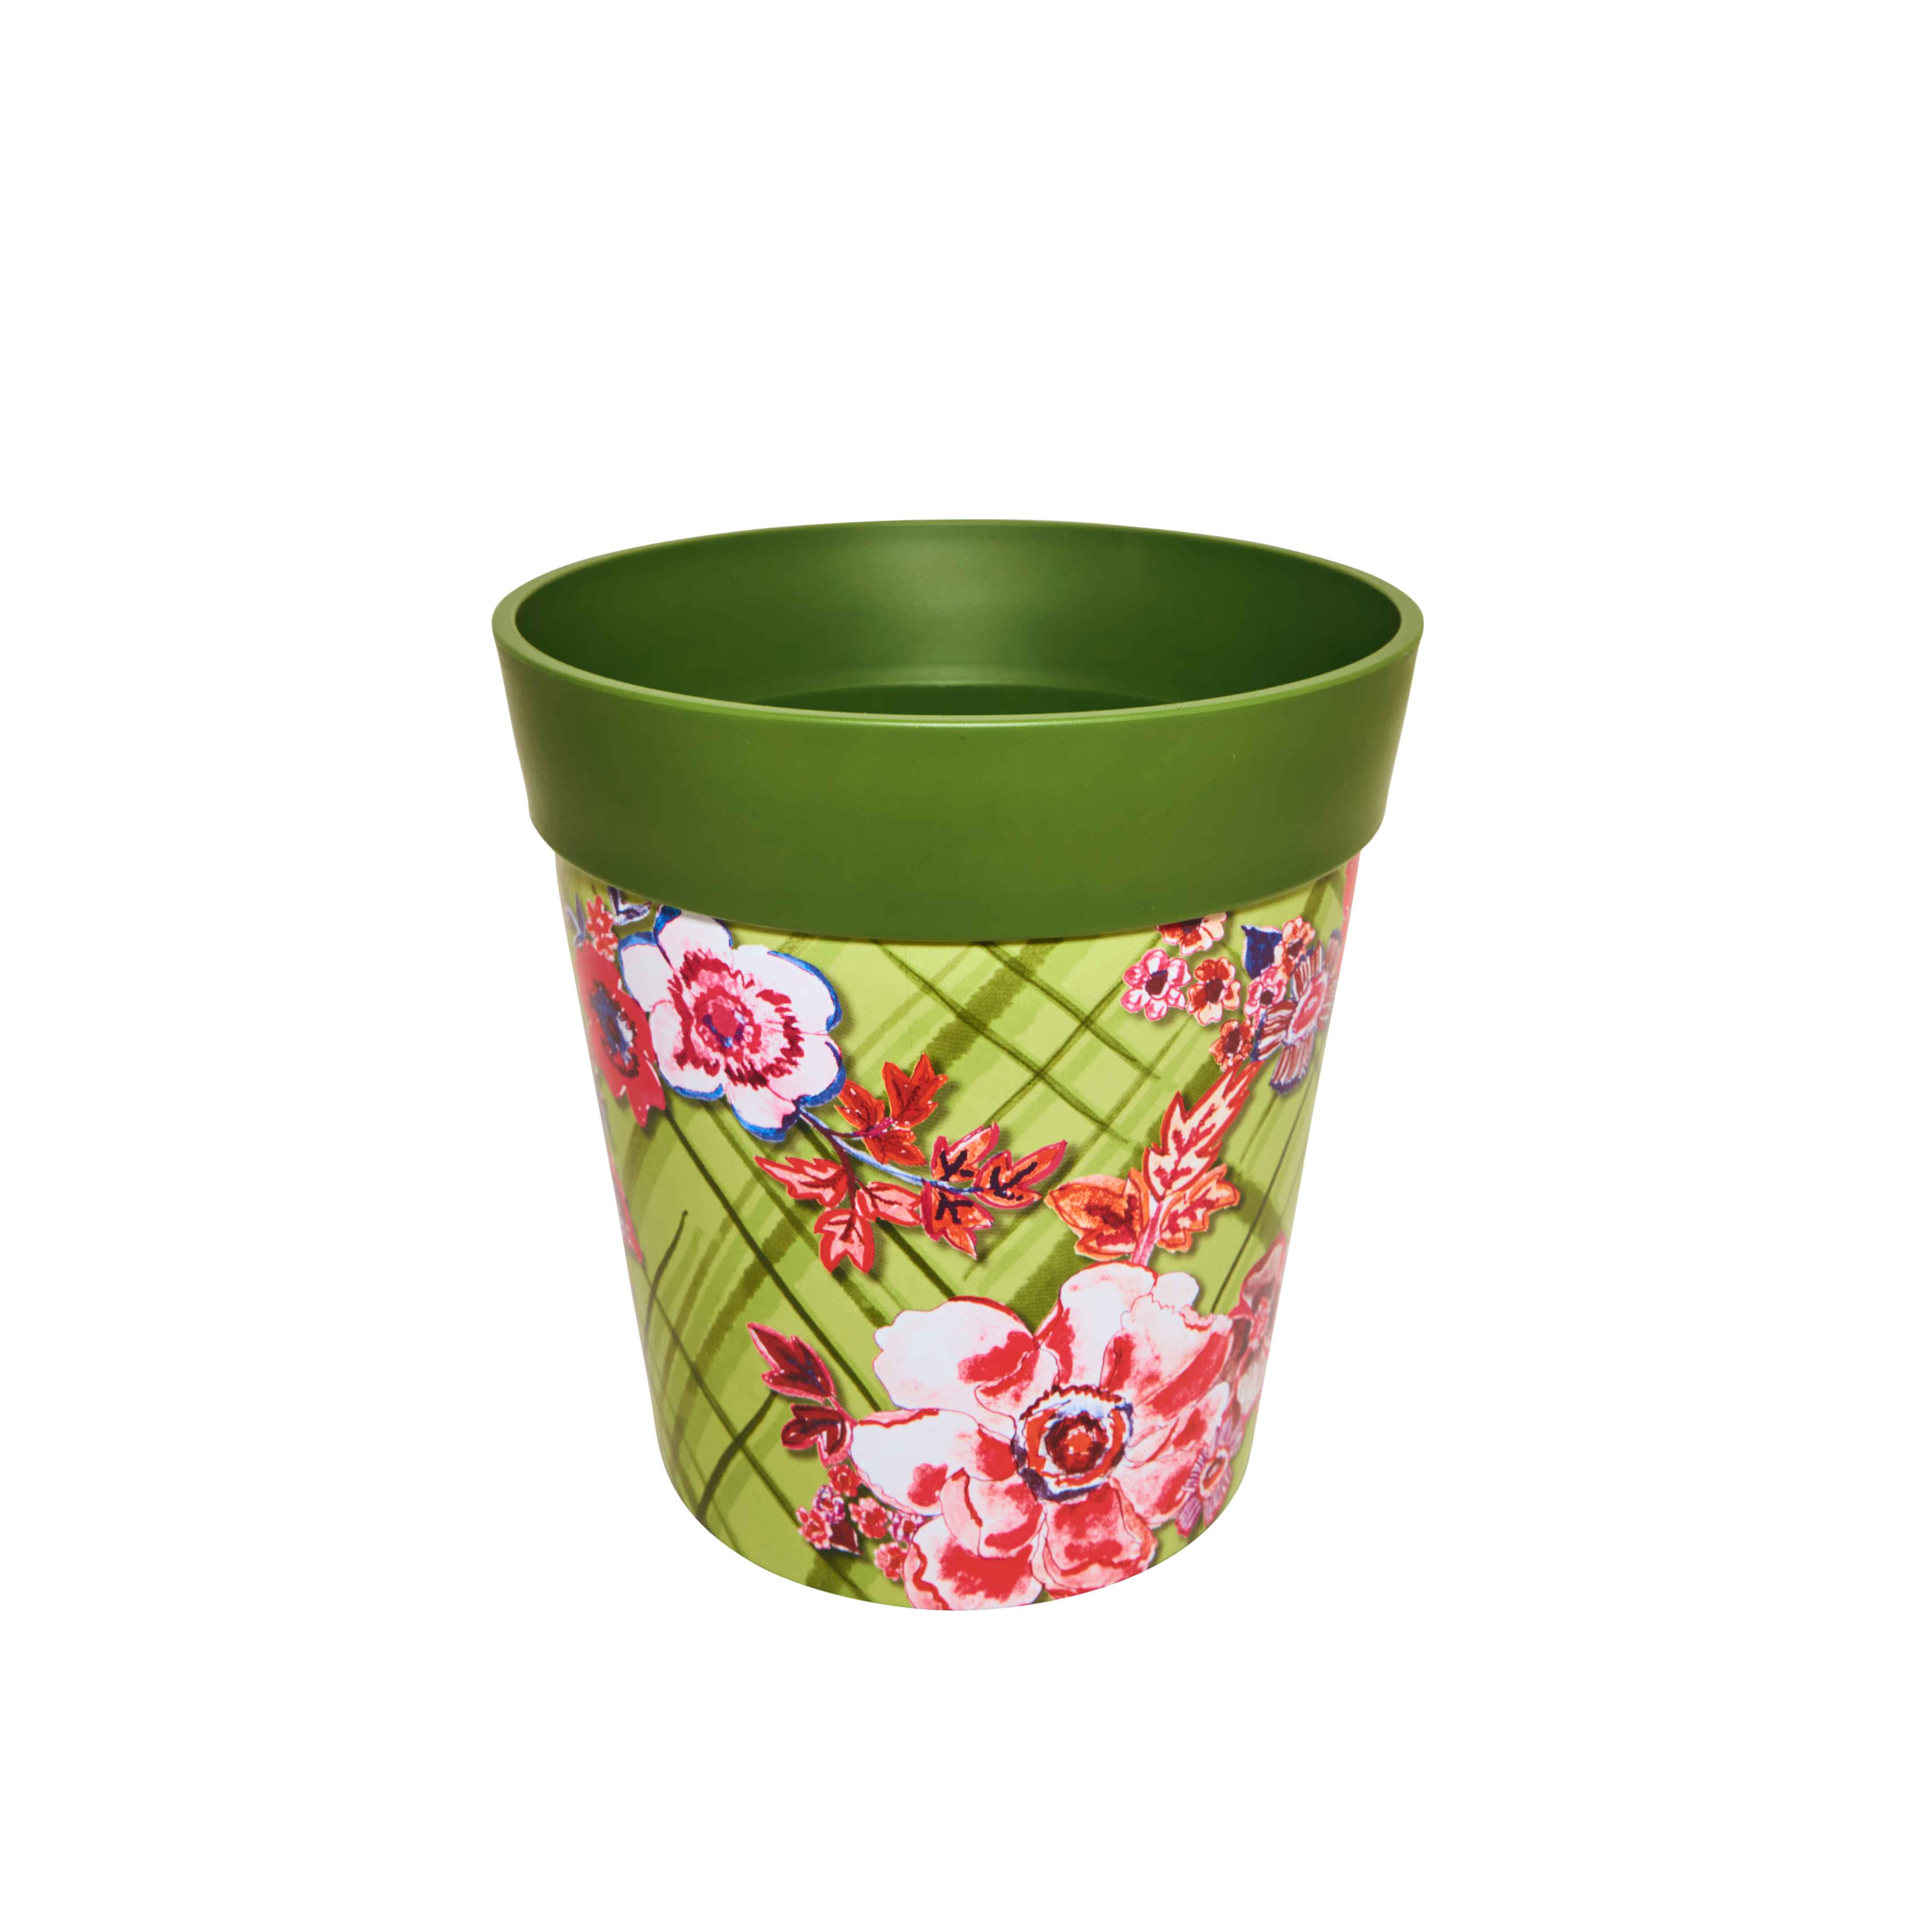 Picture of Medium 22cm Green Floral Trellis Pattern Plastic Indoor/Outdoor Flowerpot 